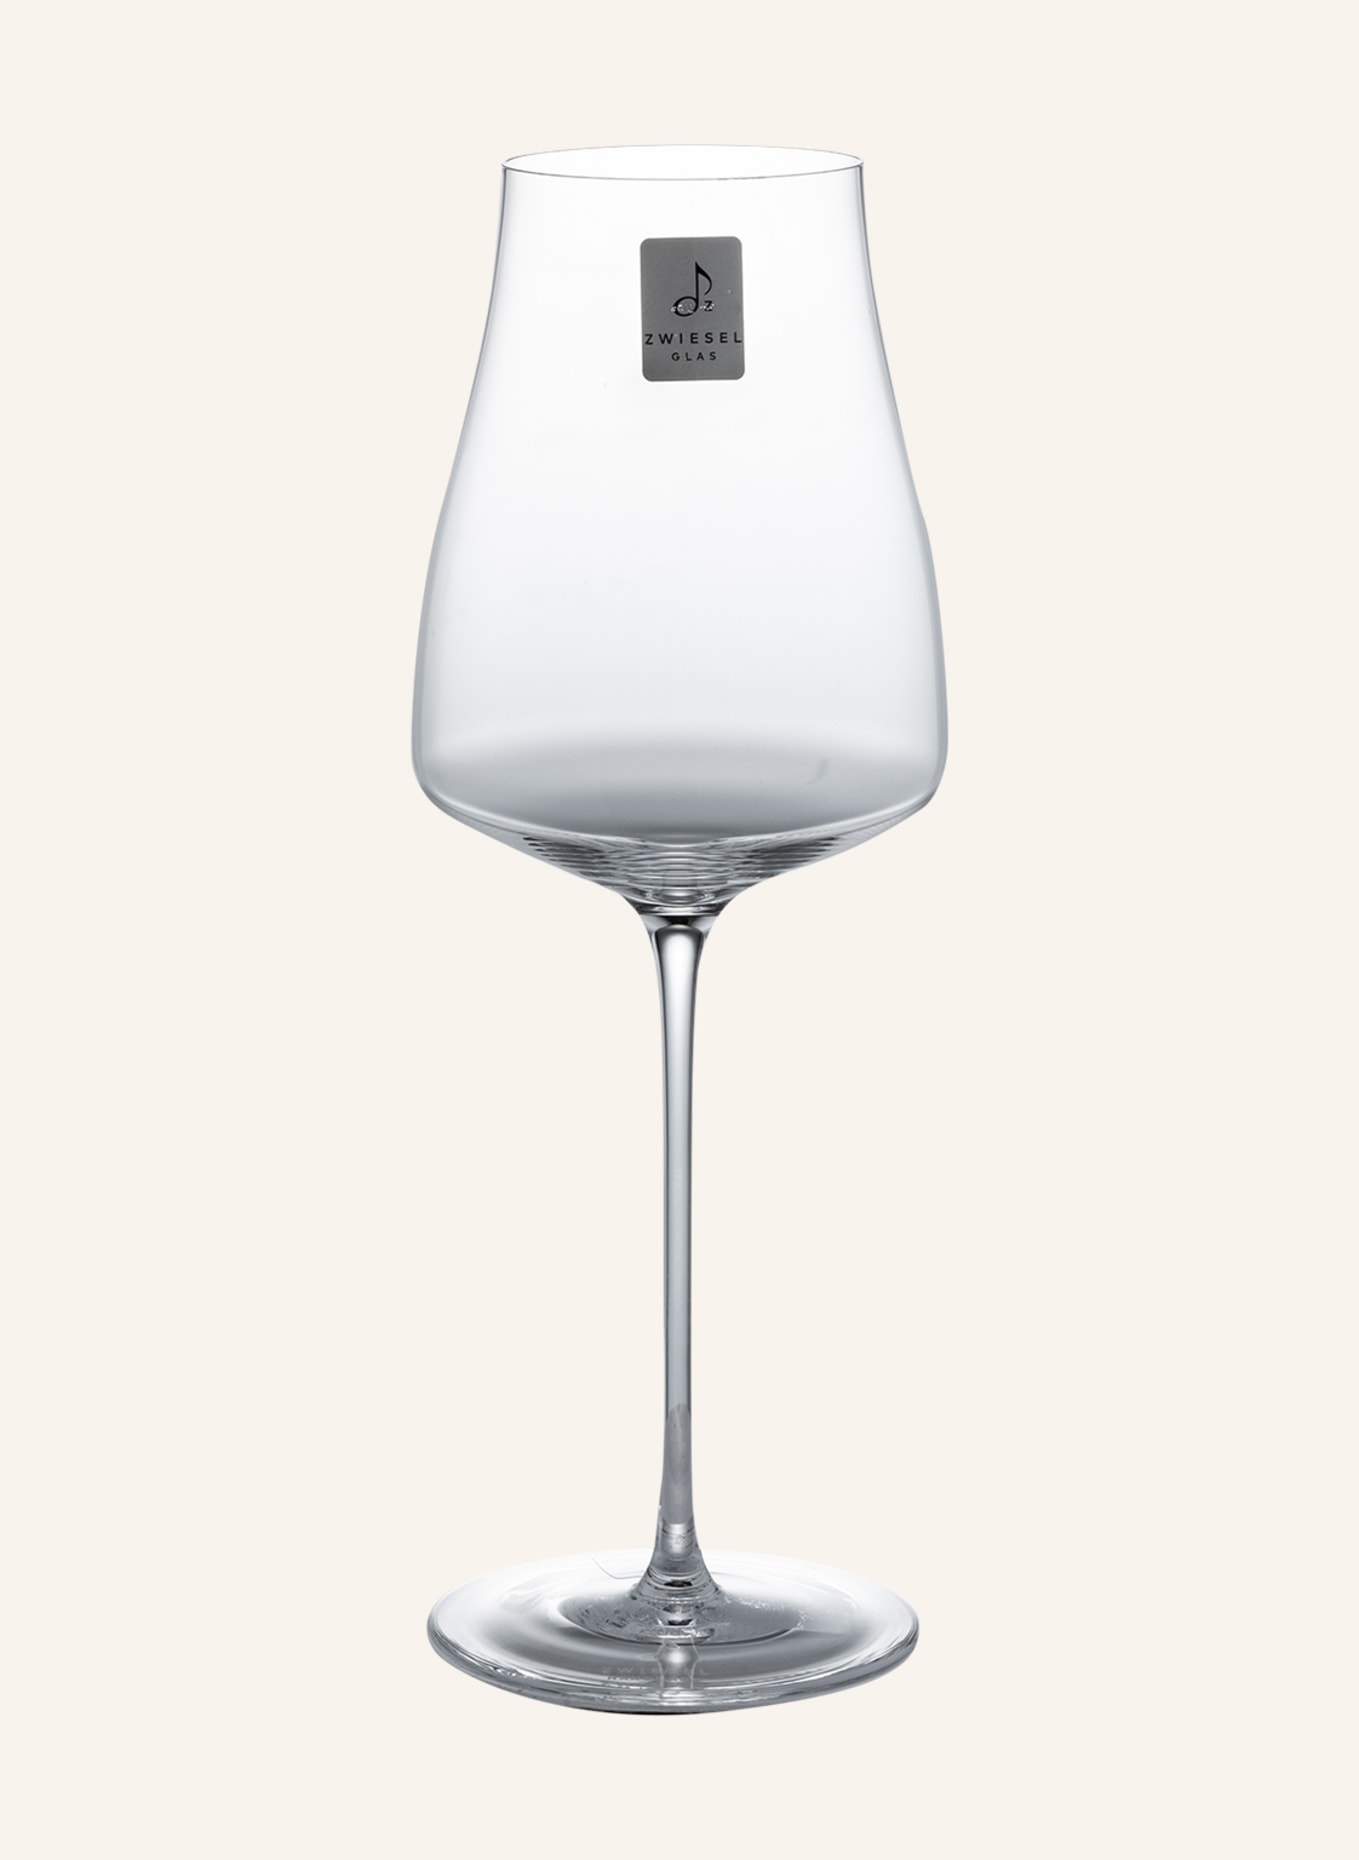 SCHOTT ZWIESEL Wine glass THE MOMENT RIESLING Volume: 342 ml